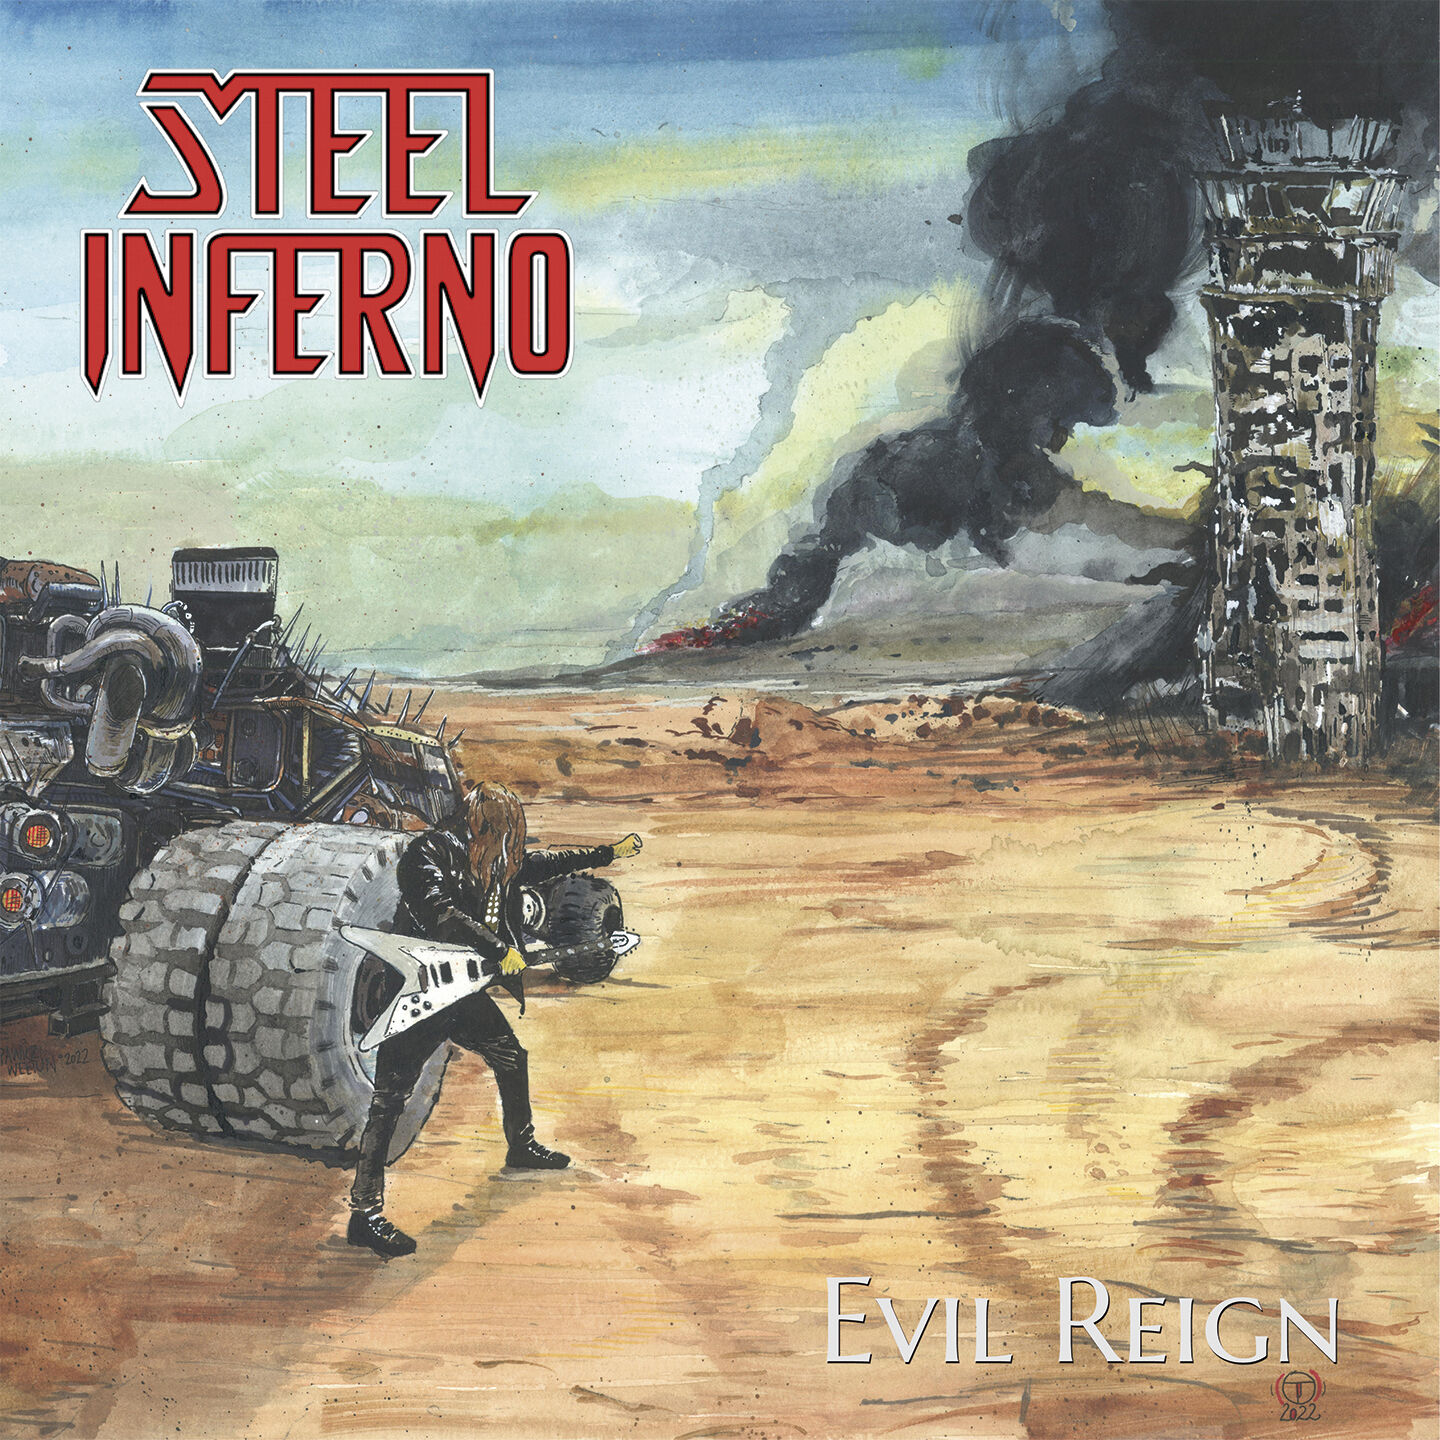 STEEL INFERNO - Evil Reign [YELLOW LP]